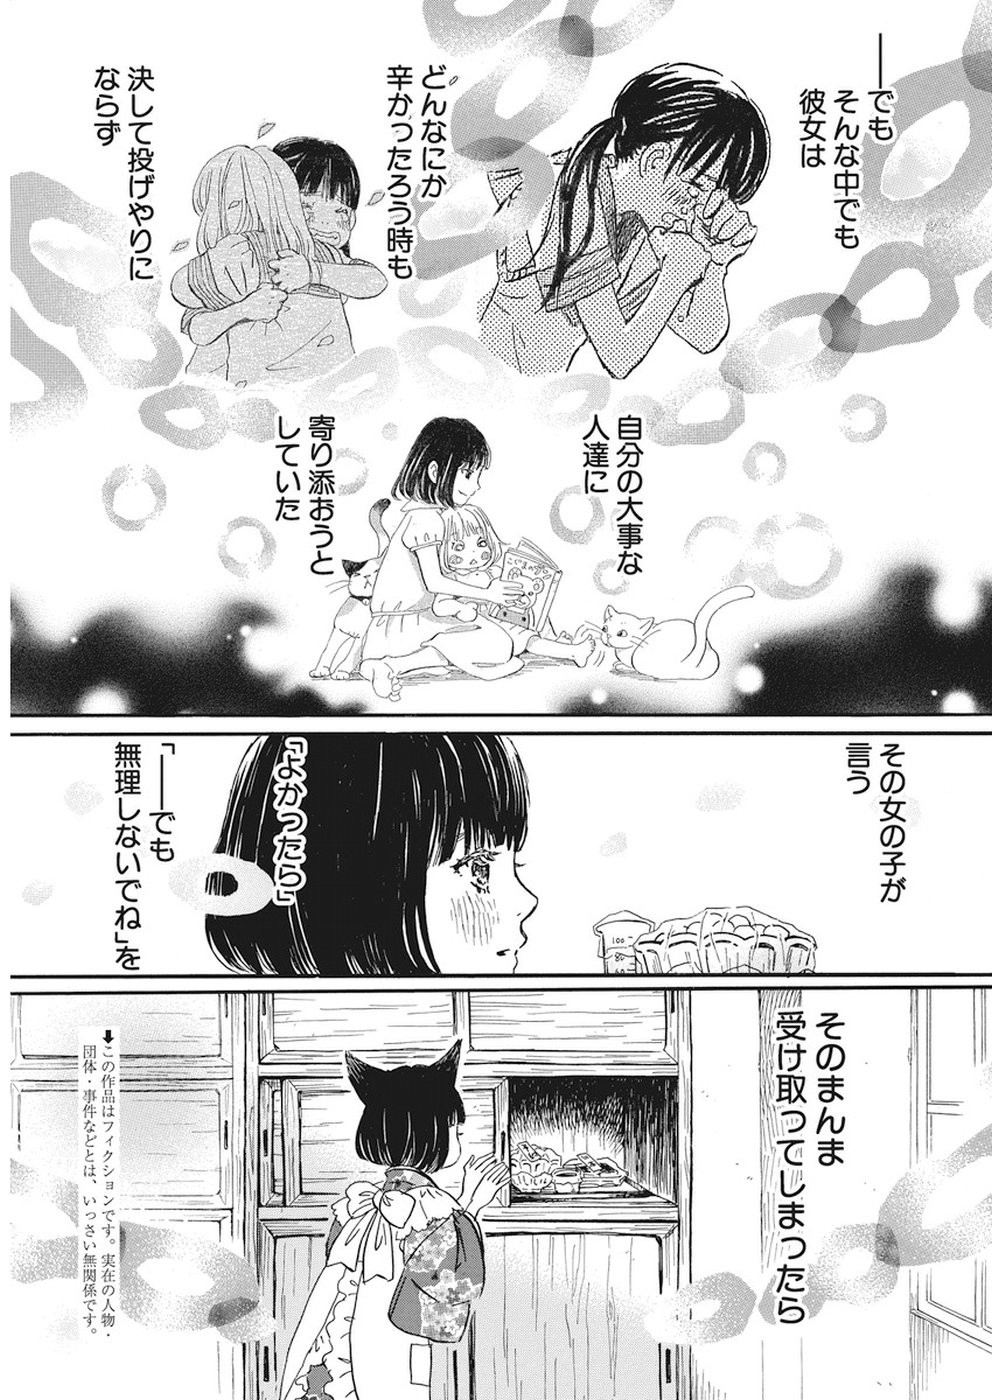 3 Gatsu no Lion - Chapter 153 - Page 3